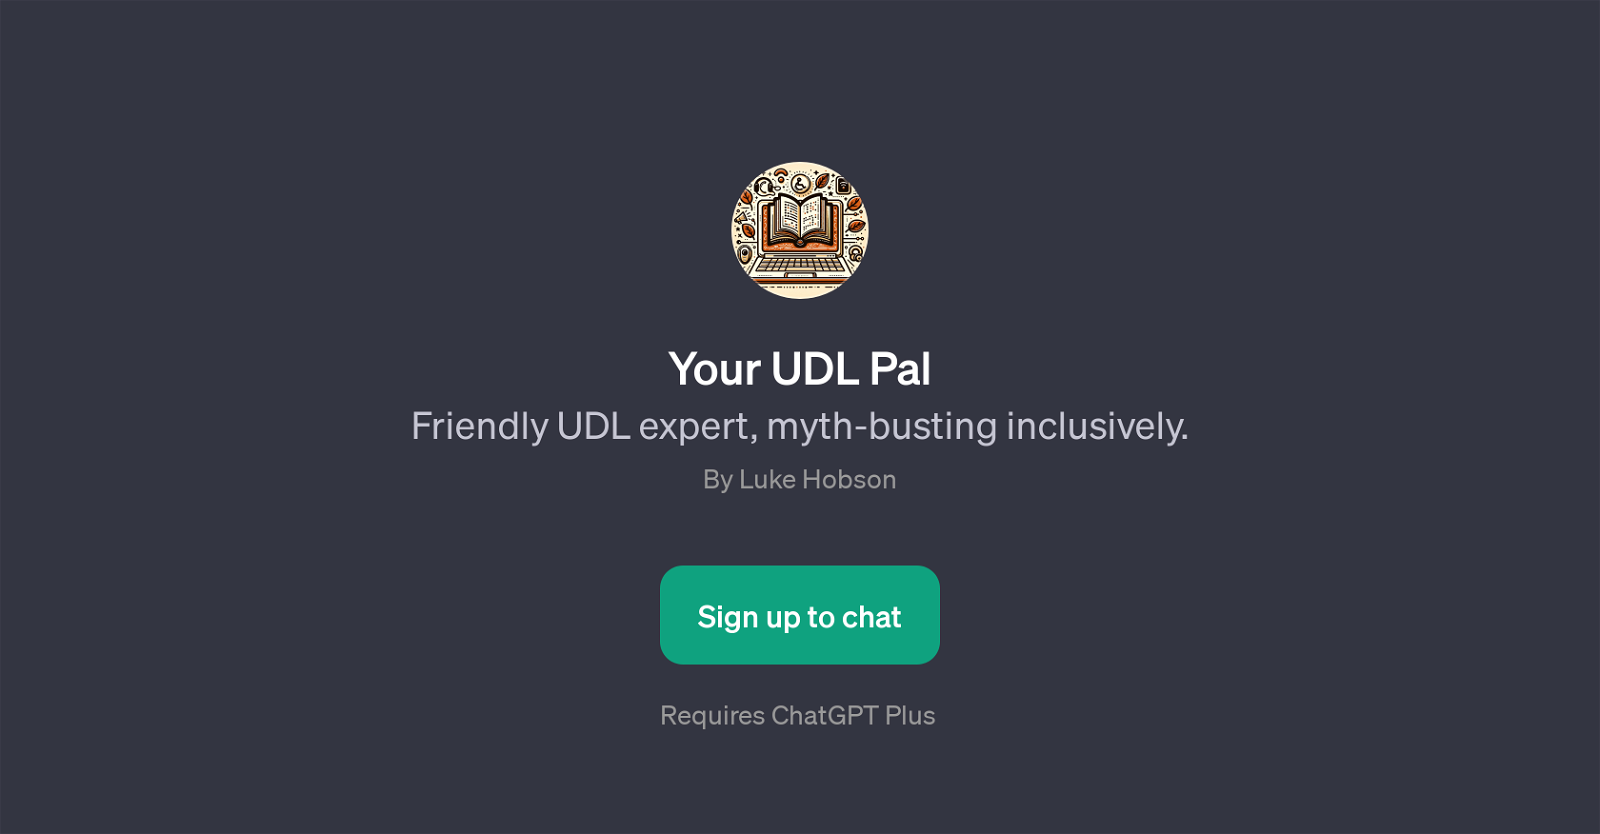 Your UDL Pal website